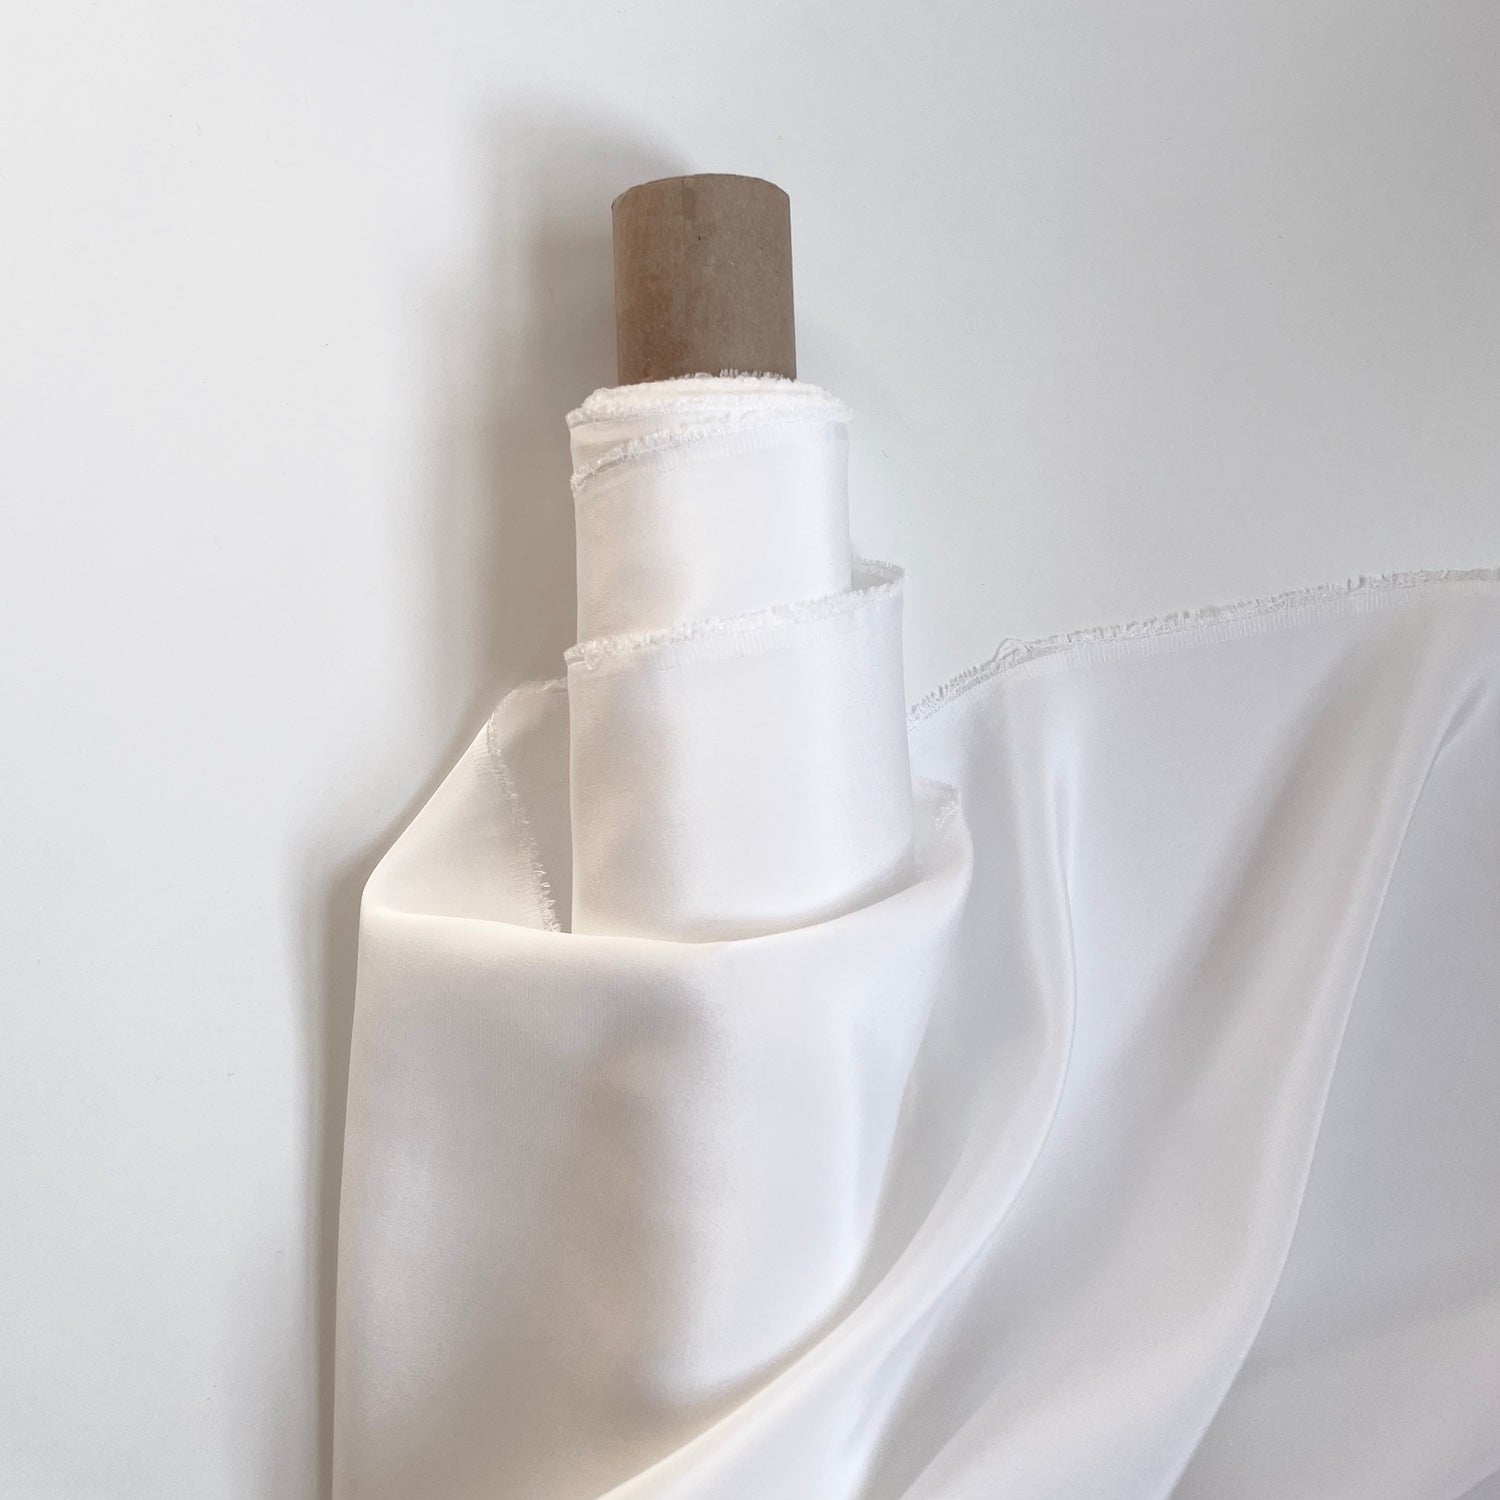 White Silk Crepe De Chine Fabric by The Yard - China 100 Pure Silk Crepe De  Chine Fabric for Dress and 100% Silk Fabric White price